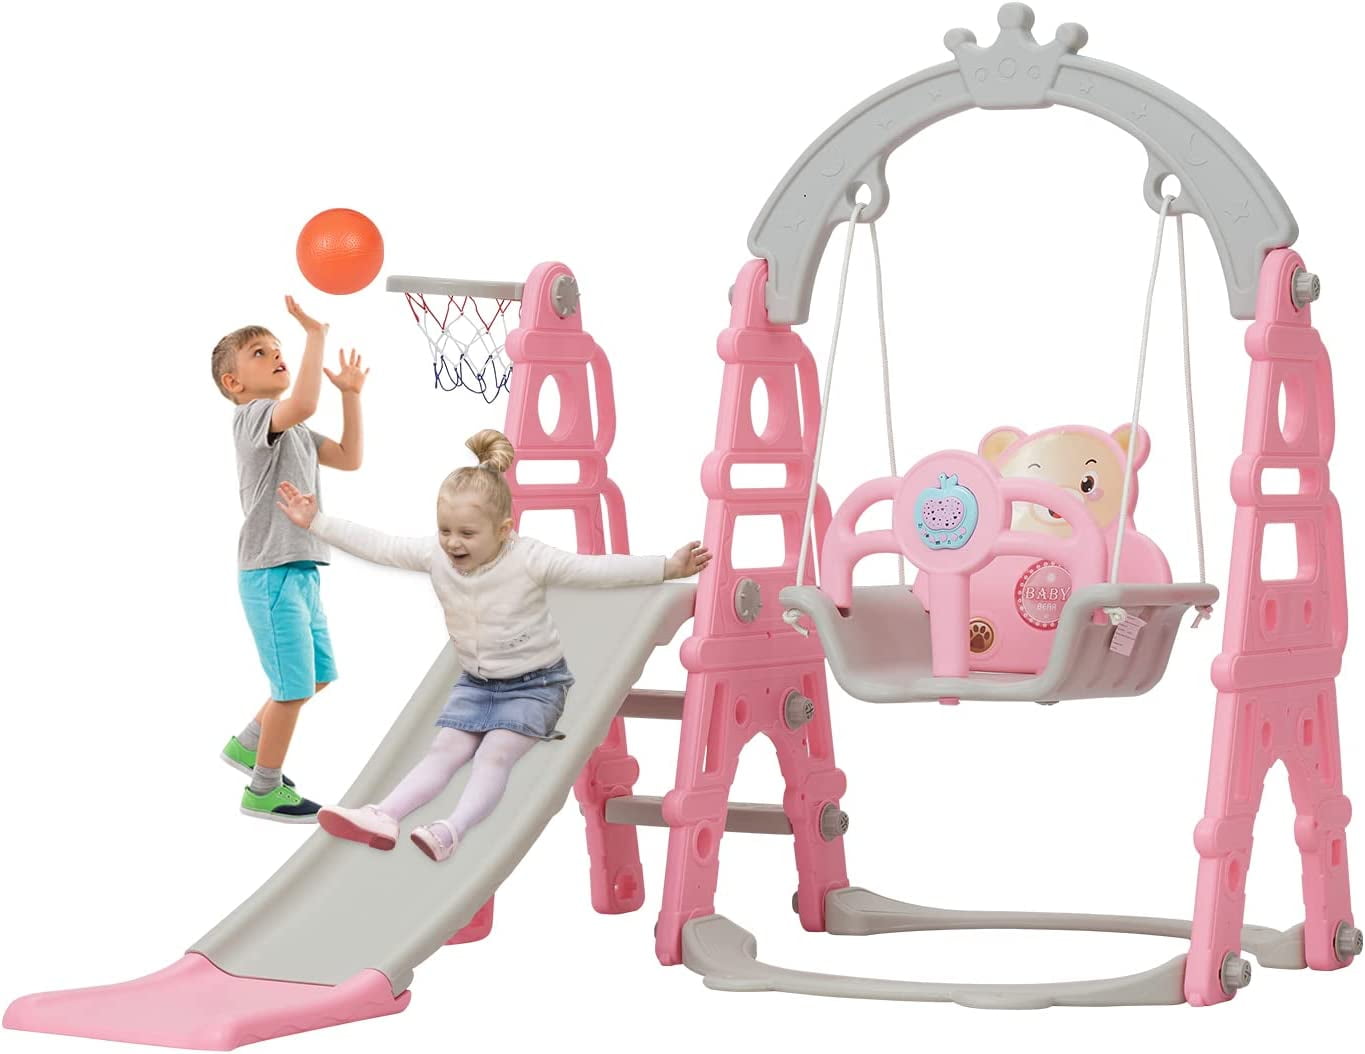 Kids Swing and Slide Set w/ Basketball Hoop & Music Player Kids Fun Slide Set for Indoor and Outdoors Playground Play Set Shark, Blue Musci Giraffe Pink 